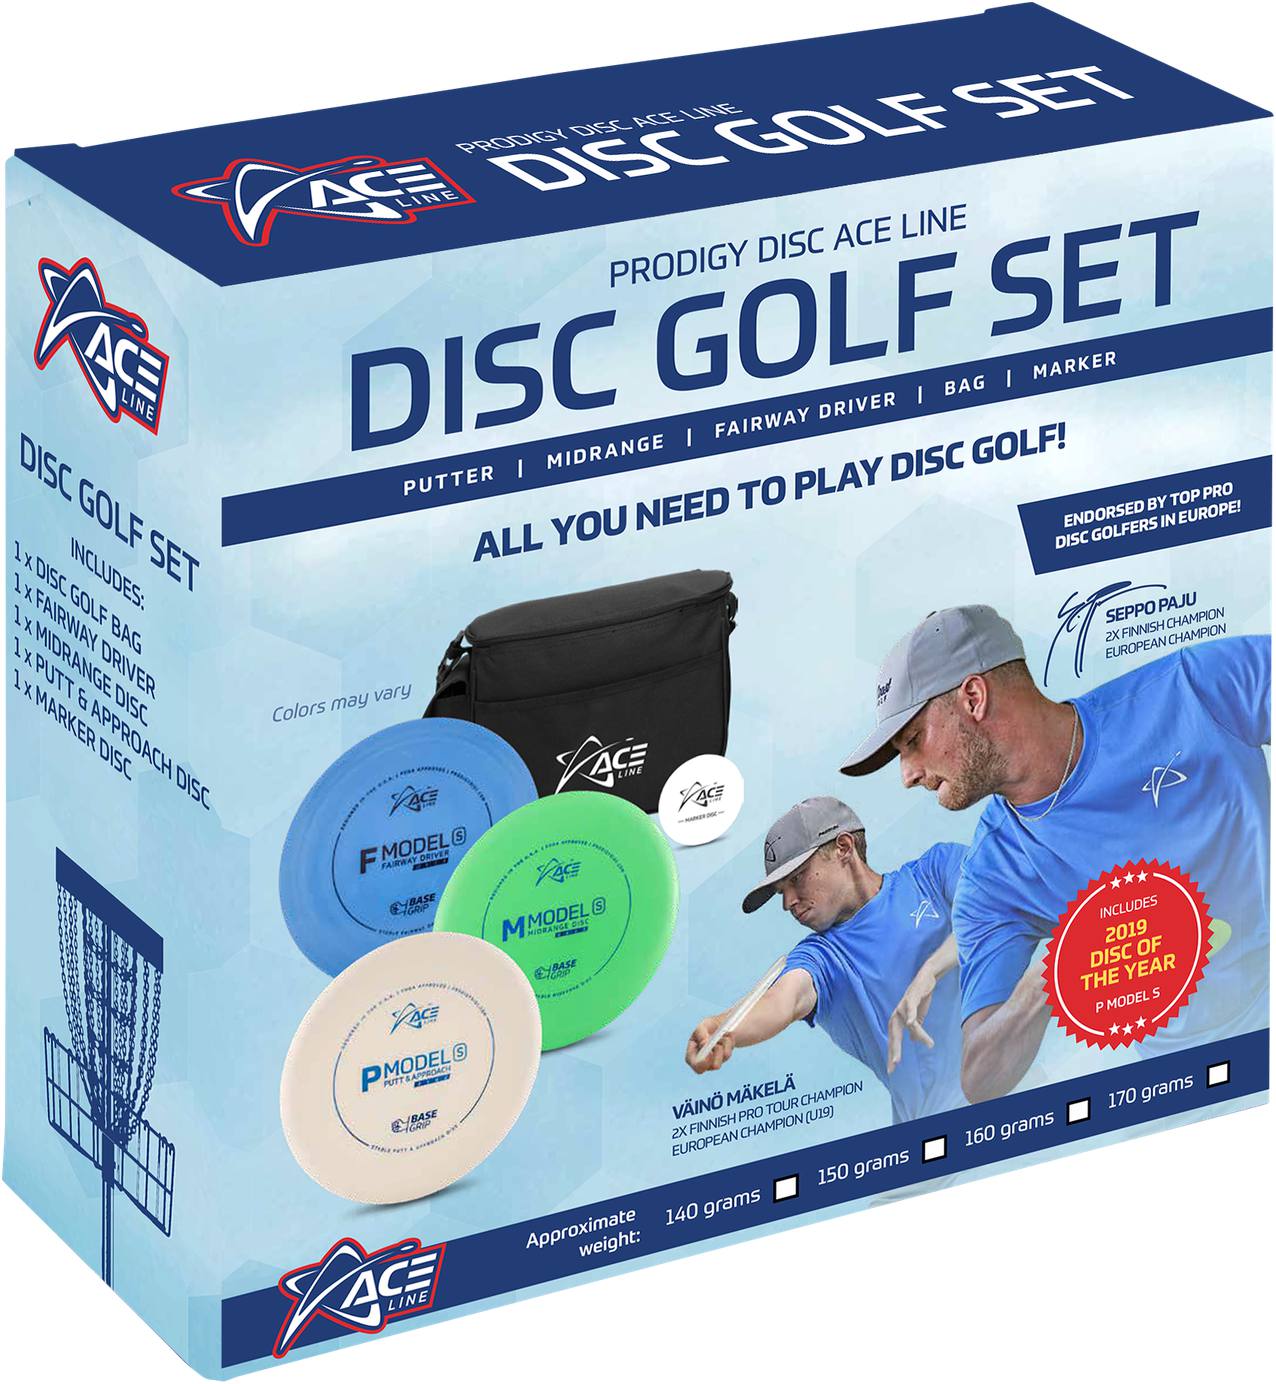 Image of Prodigy Disc Ace Golf 3-set + Bag